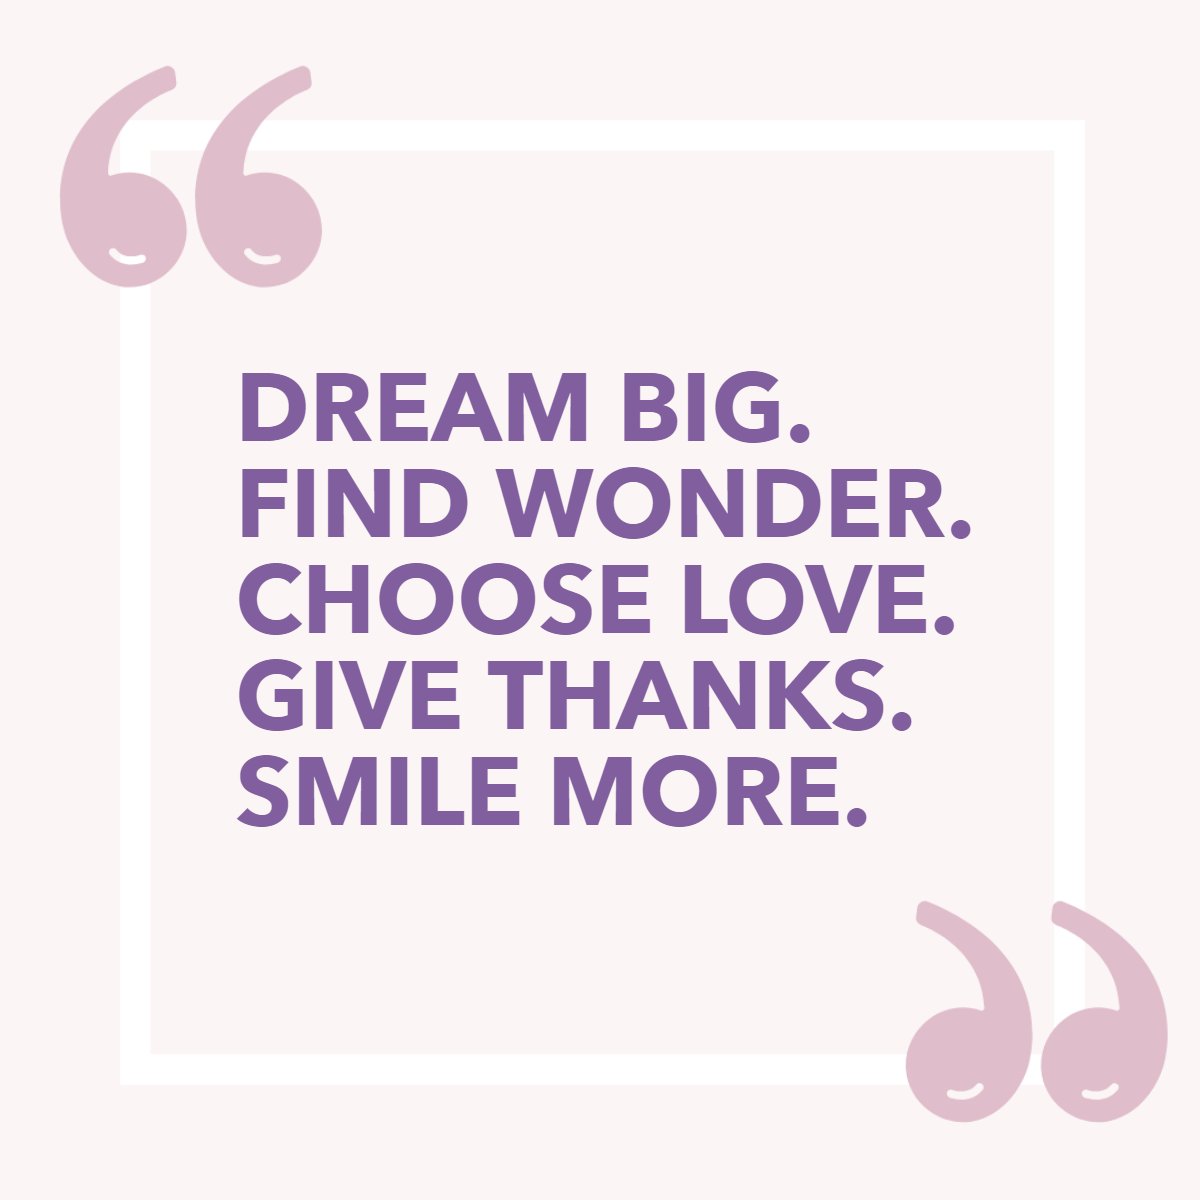 Dream Big.
Find Wonder. 
Choose Love. 
Give Thanks. 
Smile More.🤗

#dreambig #givethanks #smilemore #bigdreams #ichooselove #findwonder #smilemore
 #OhioRealEstate #AkronRealtor #CantonRealtor